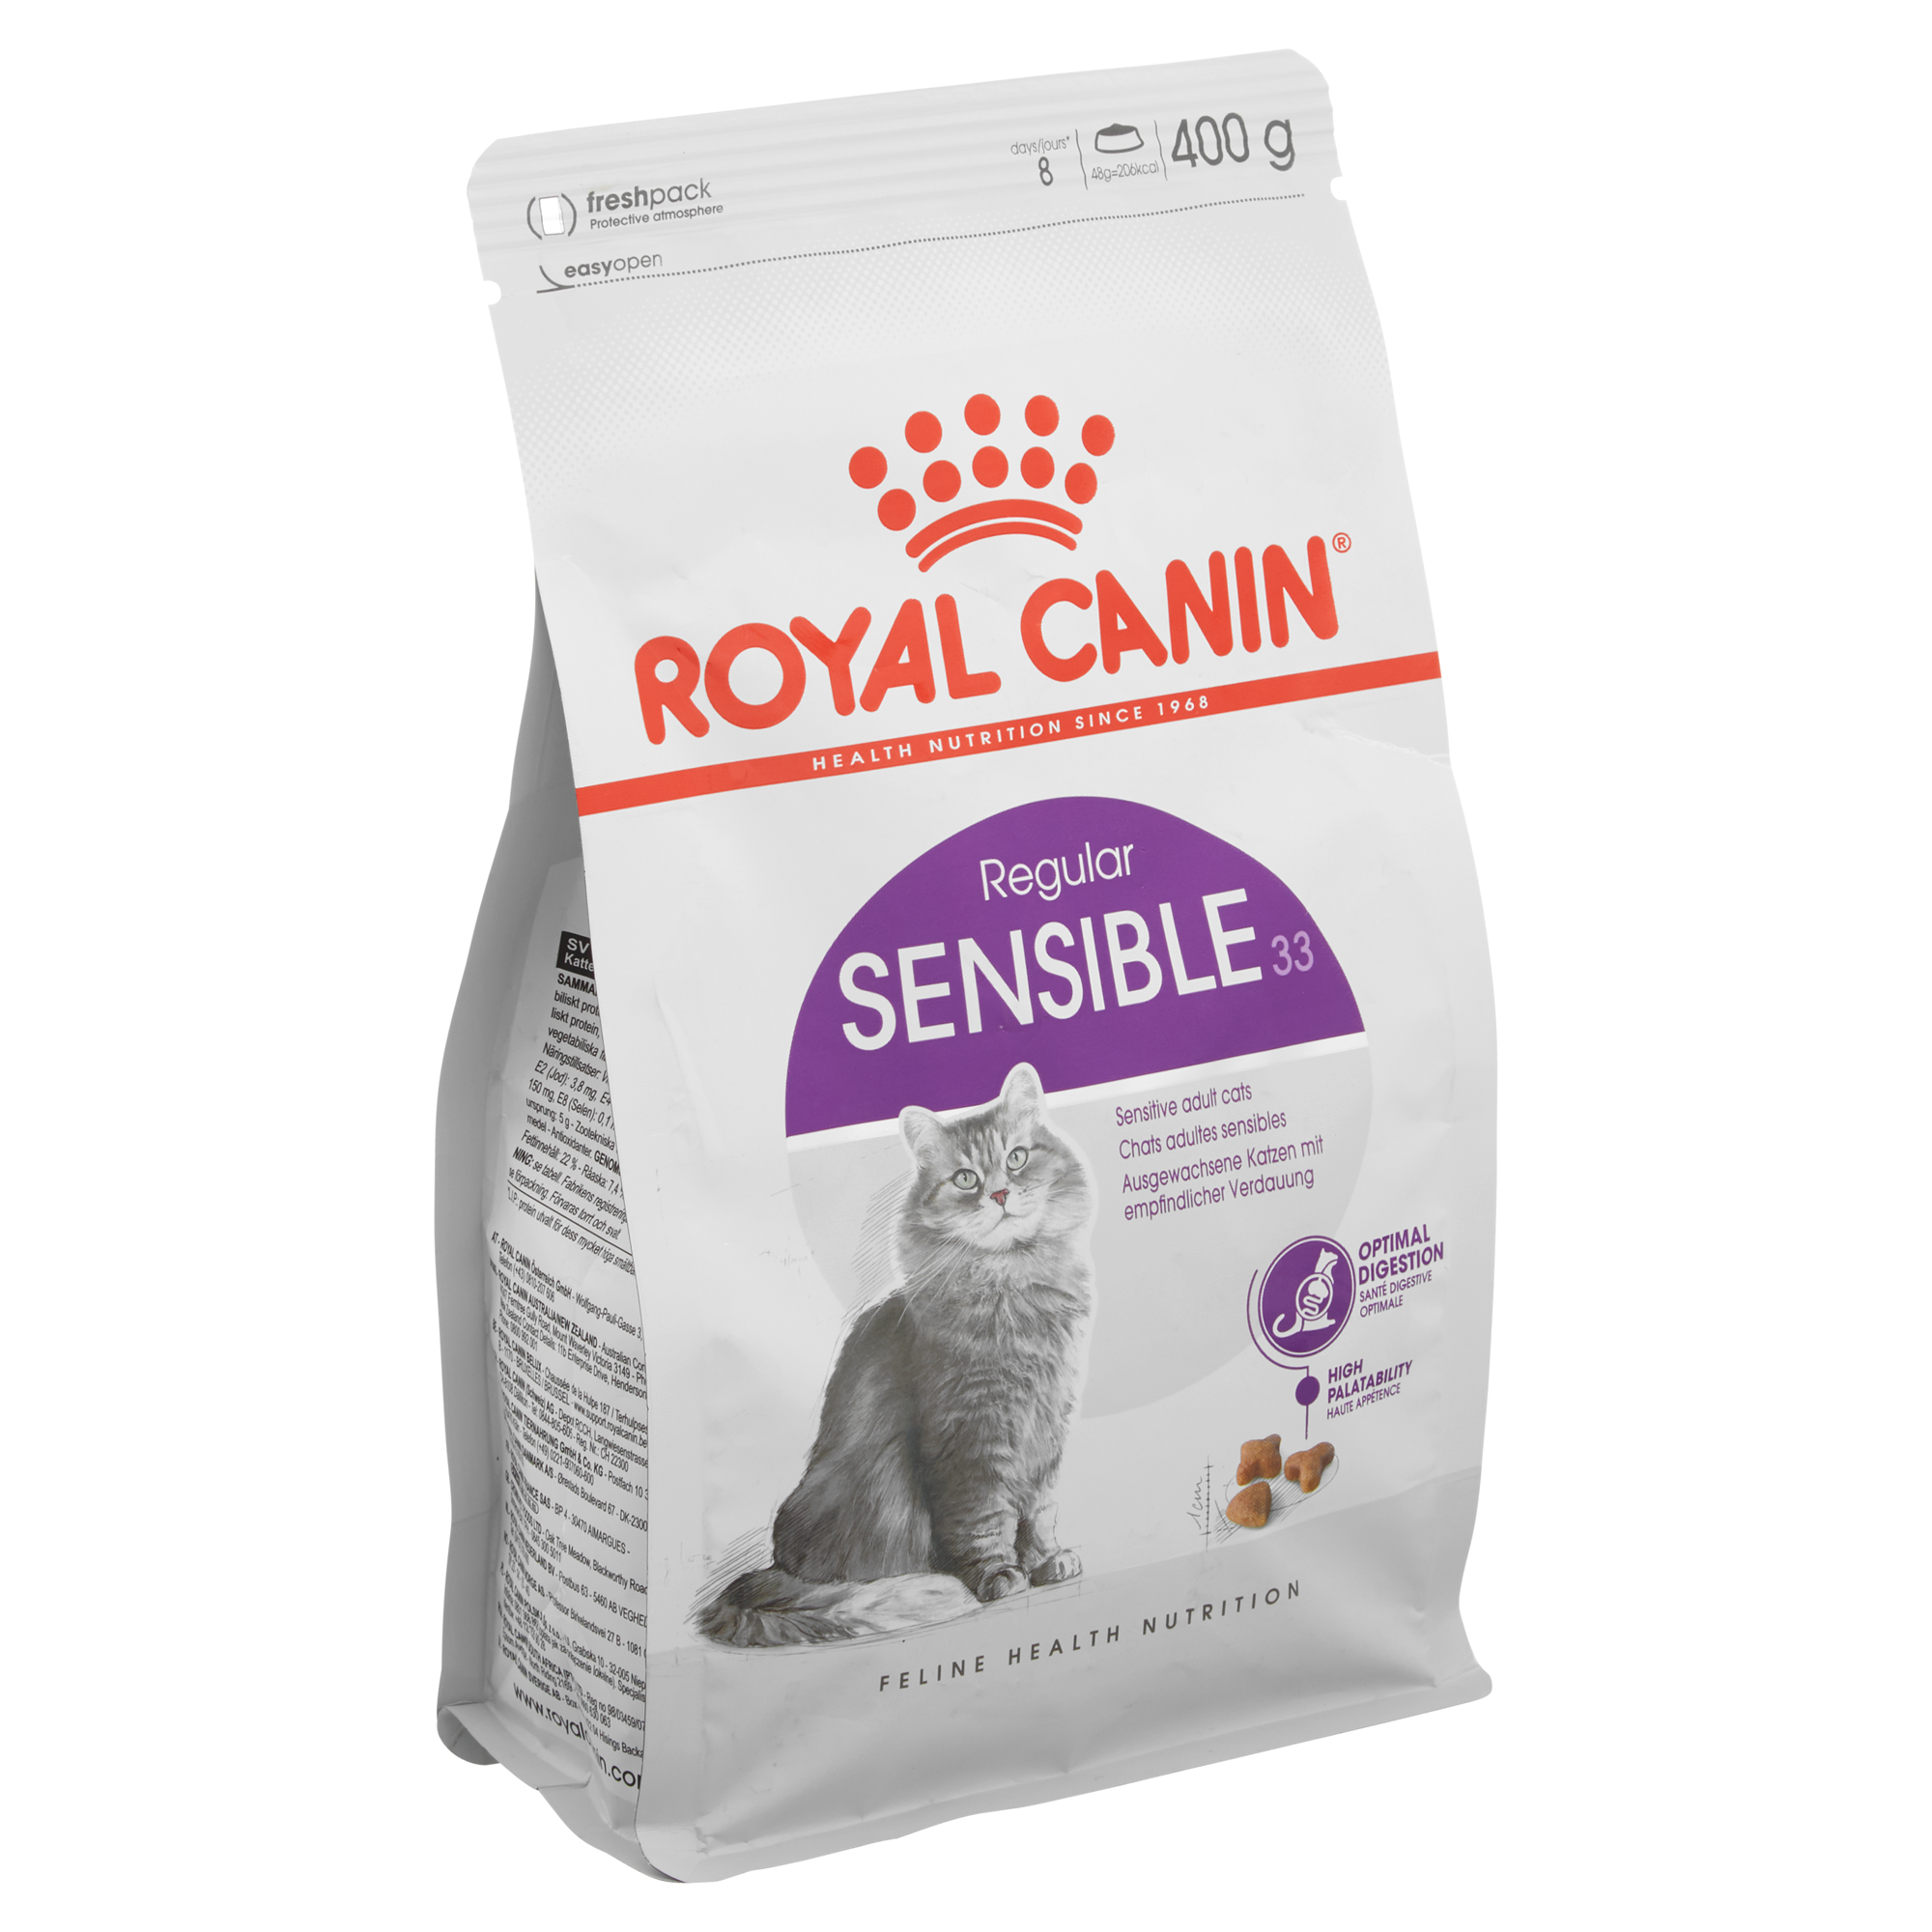 Katzentrockenfutter "Feline Health Nutrition" Regular Sensible 33 0,4 kg + product picture